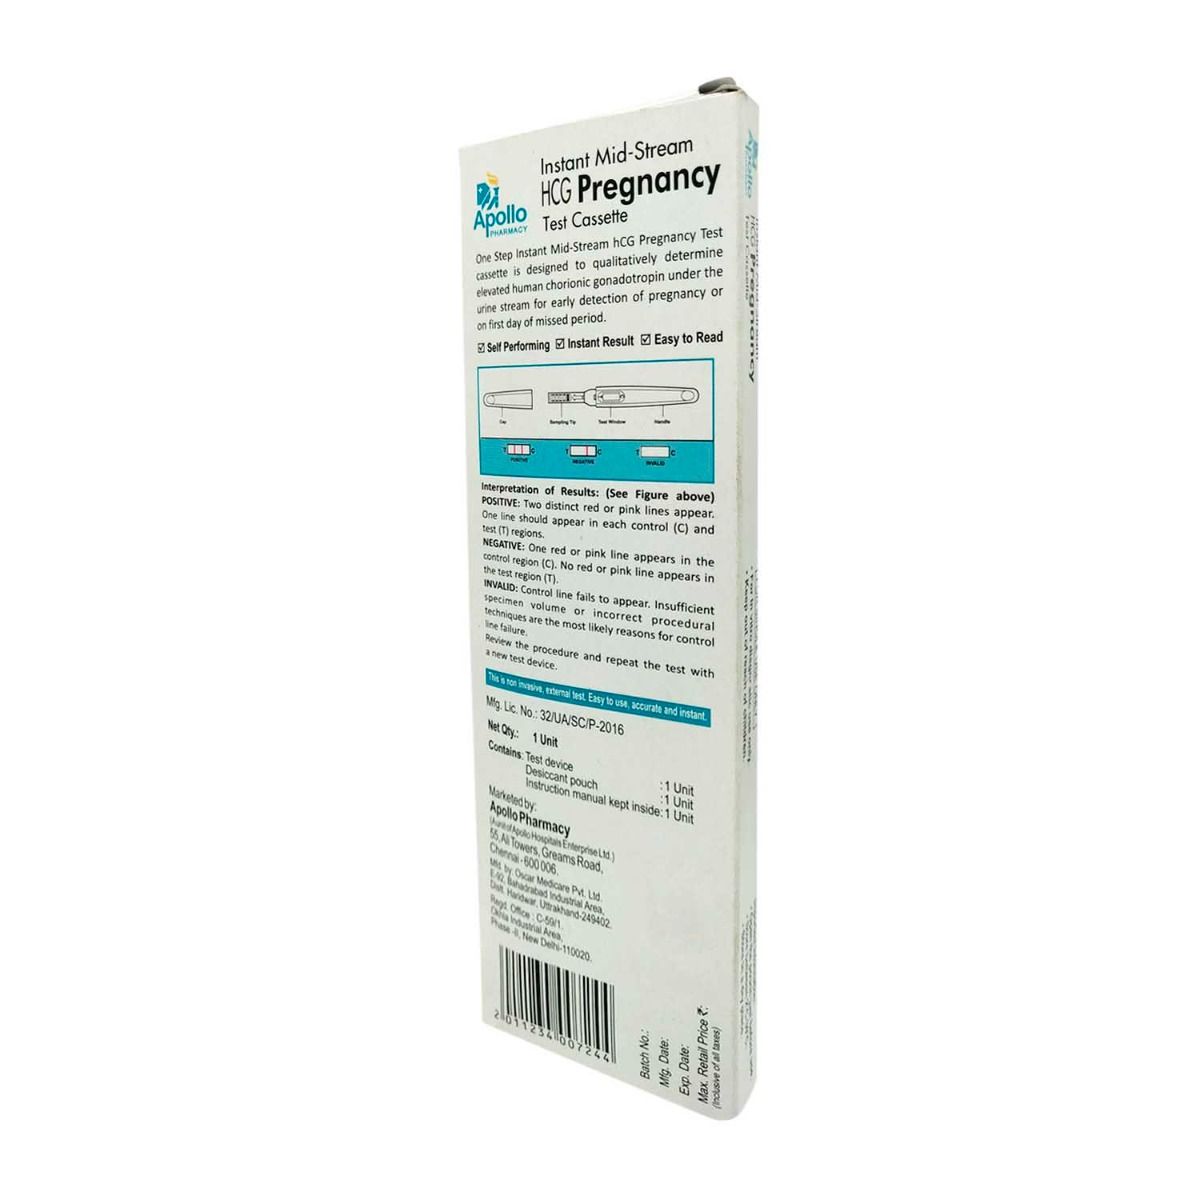 Apollo Pharmacy Instant Mid-Stream HCG Pregnancy Test Cassette, 1 Count, Pack of 1 